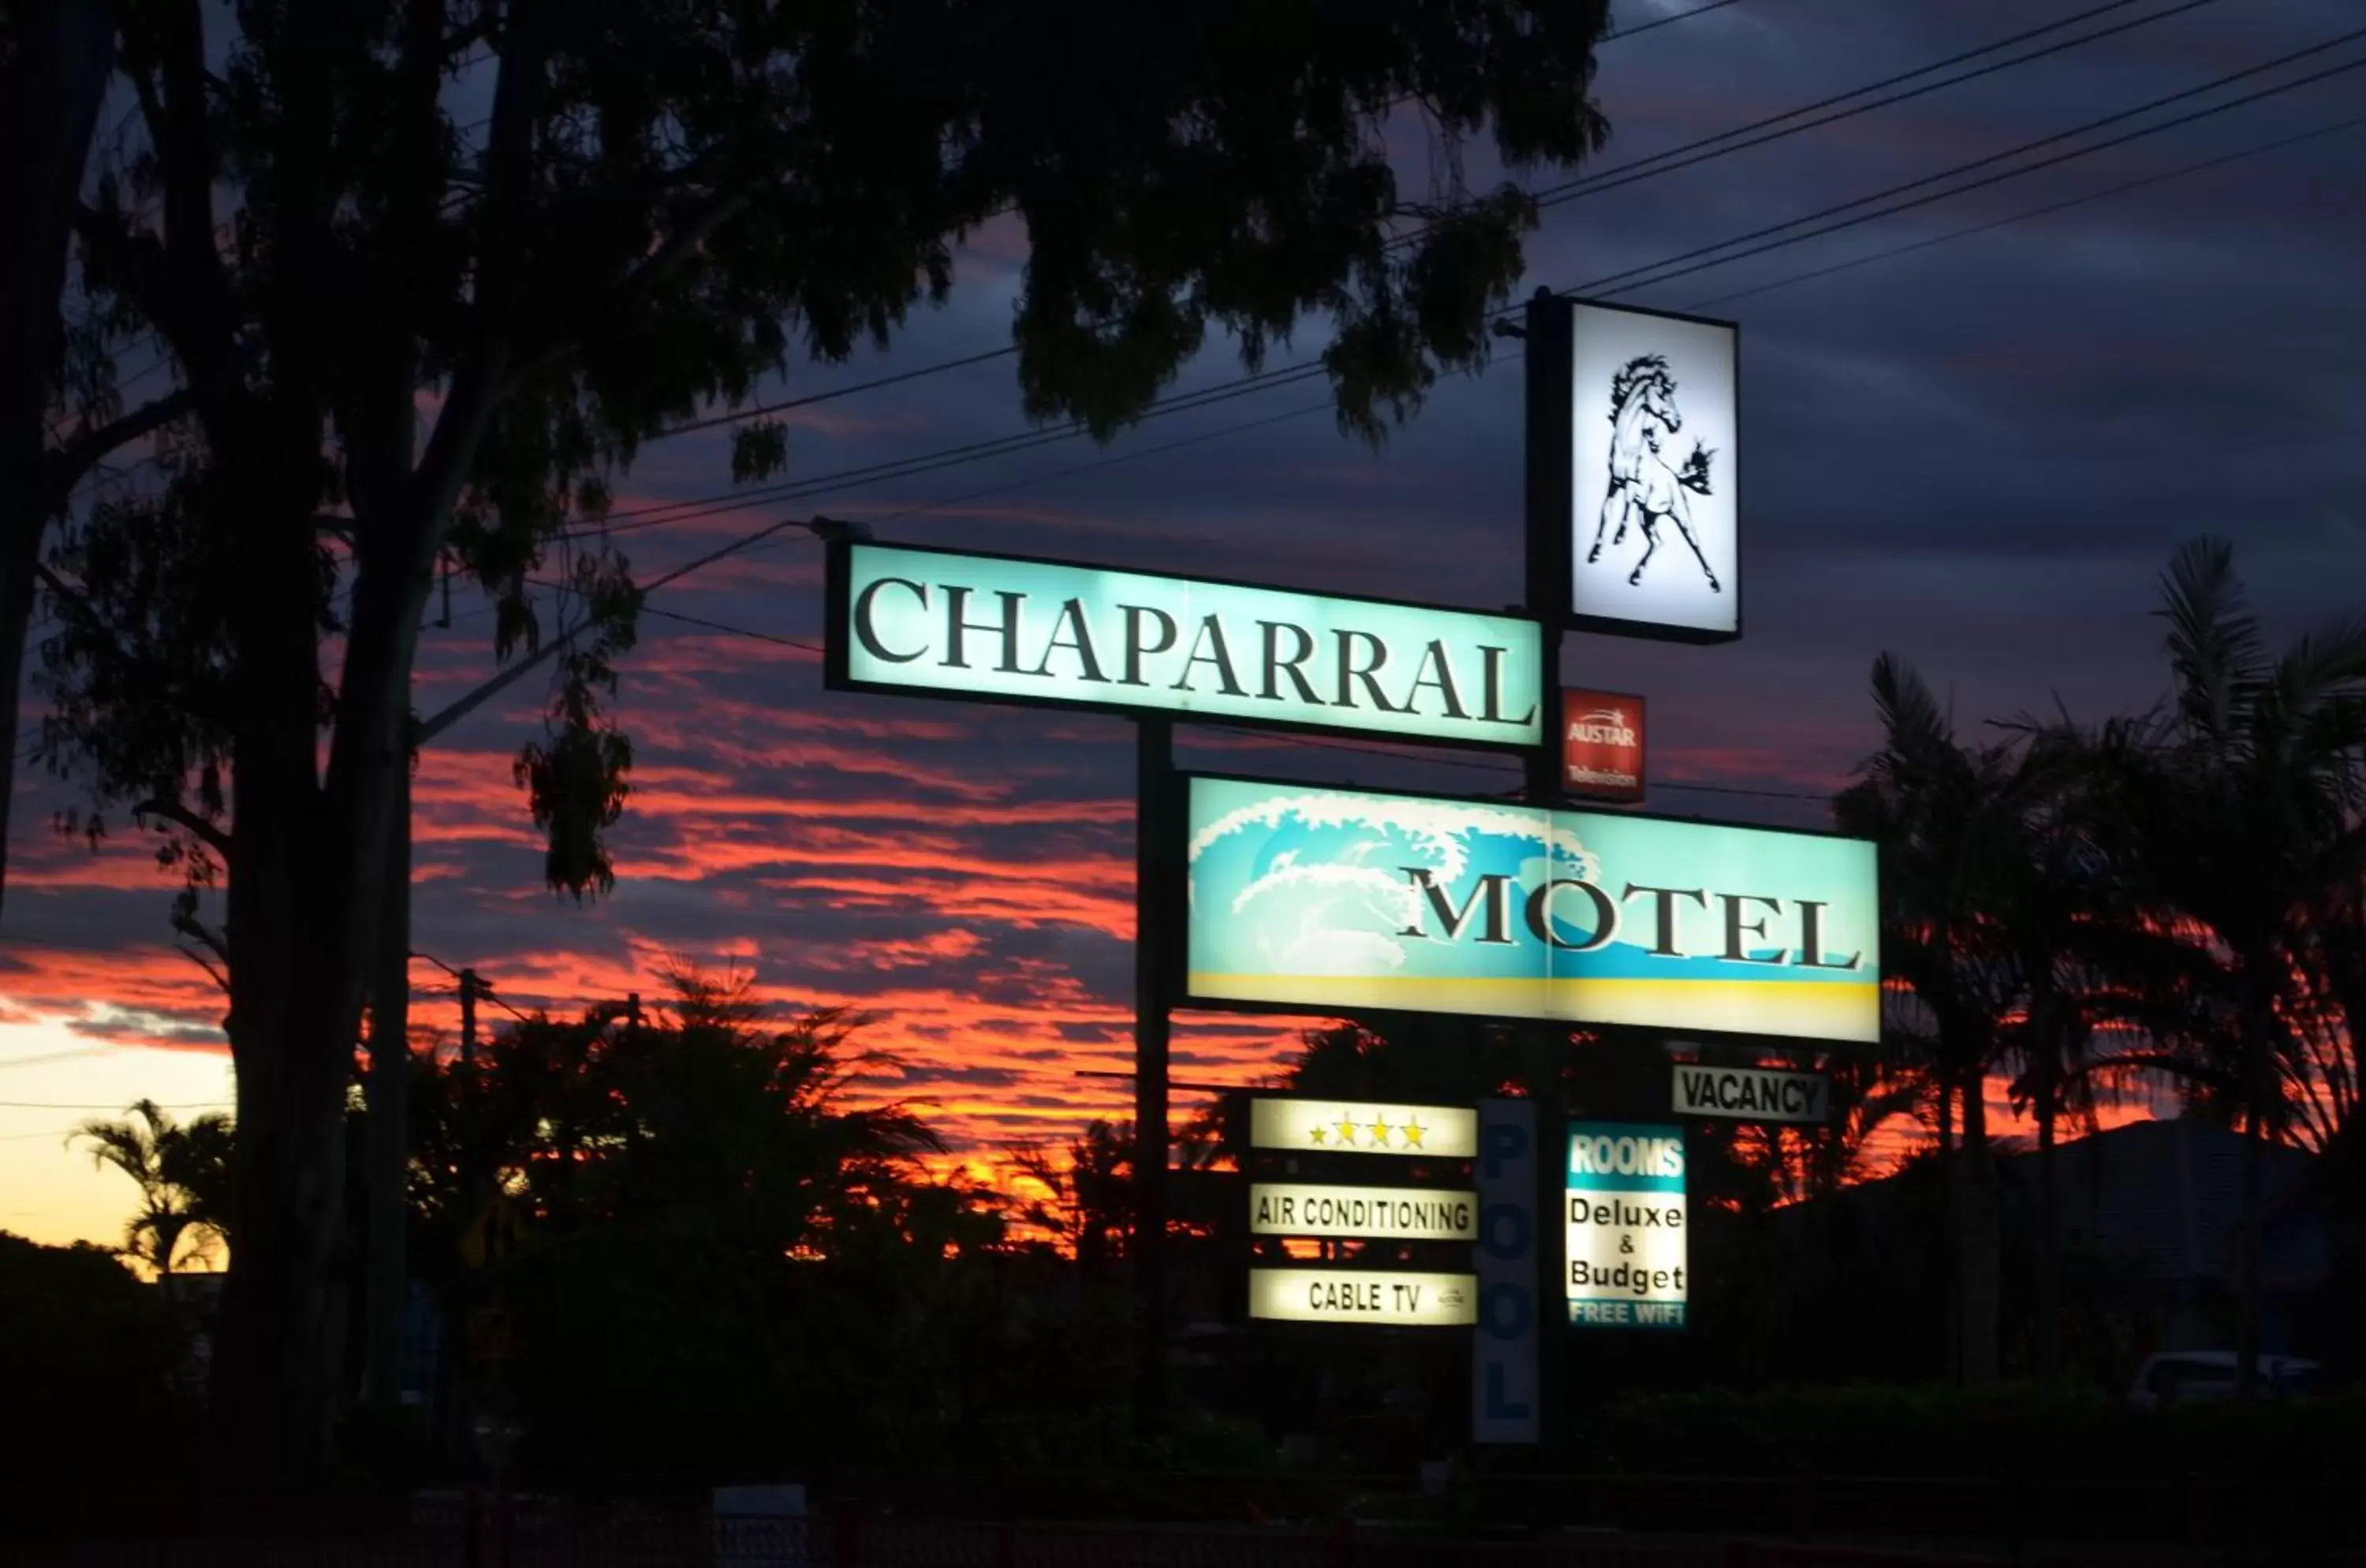 Facade/entrance in Chaparral Motel